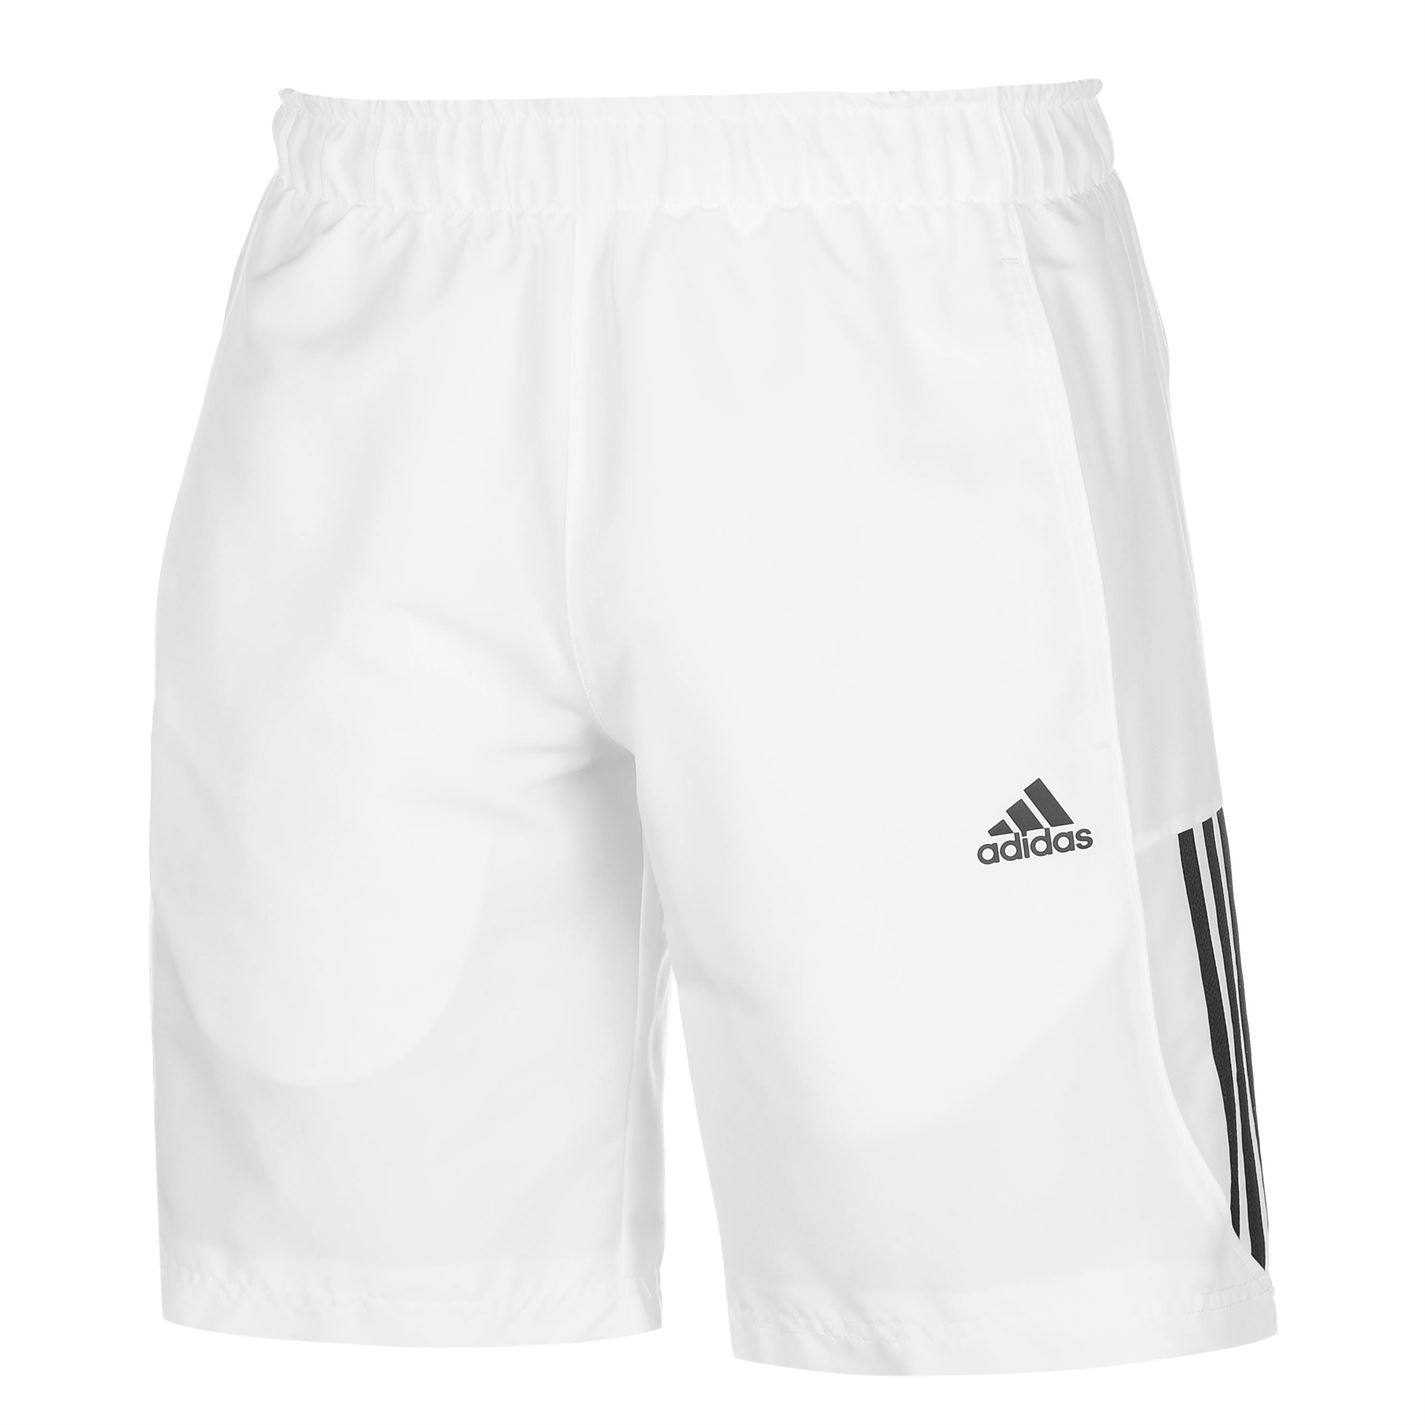 Buy Adidas Men's White Running Shorts Online @ ₹1499 from ShopClues